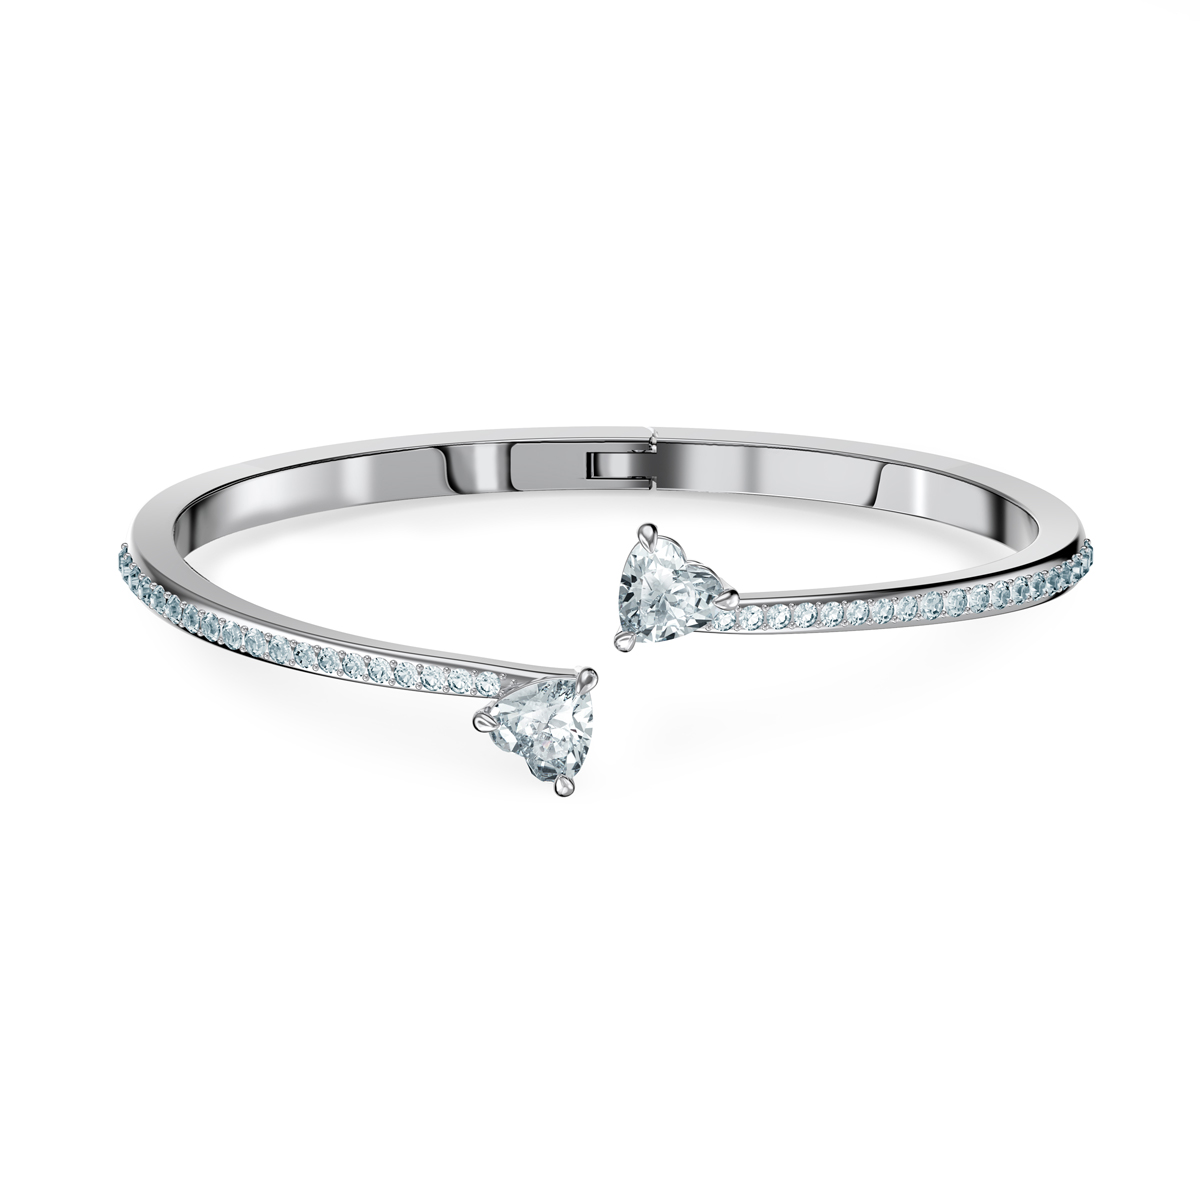 Swarovski Attract Soul Crystal and Rhodium Heart Bangle Bracelet, Medium